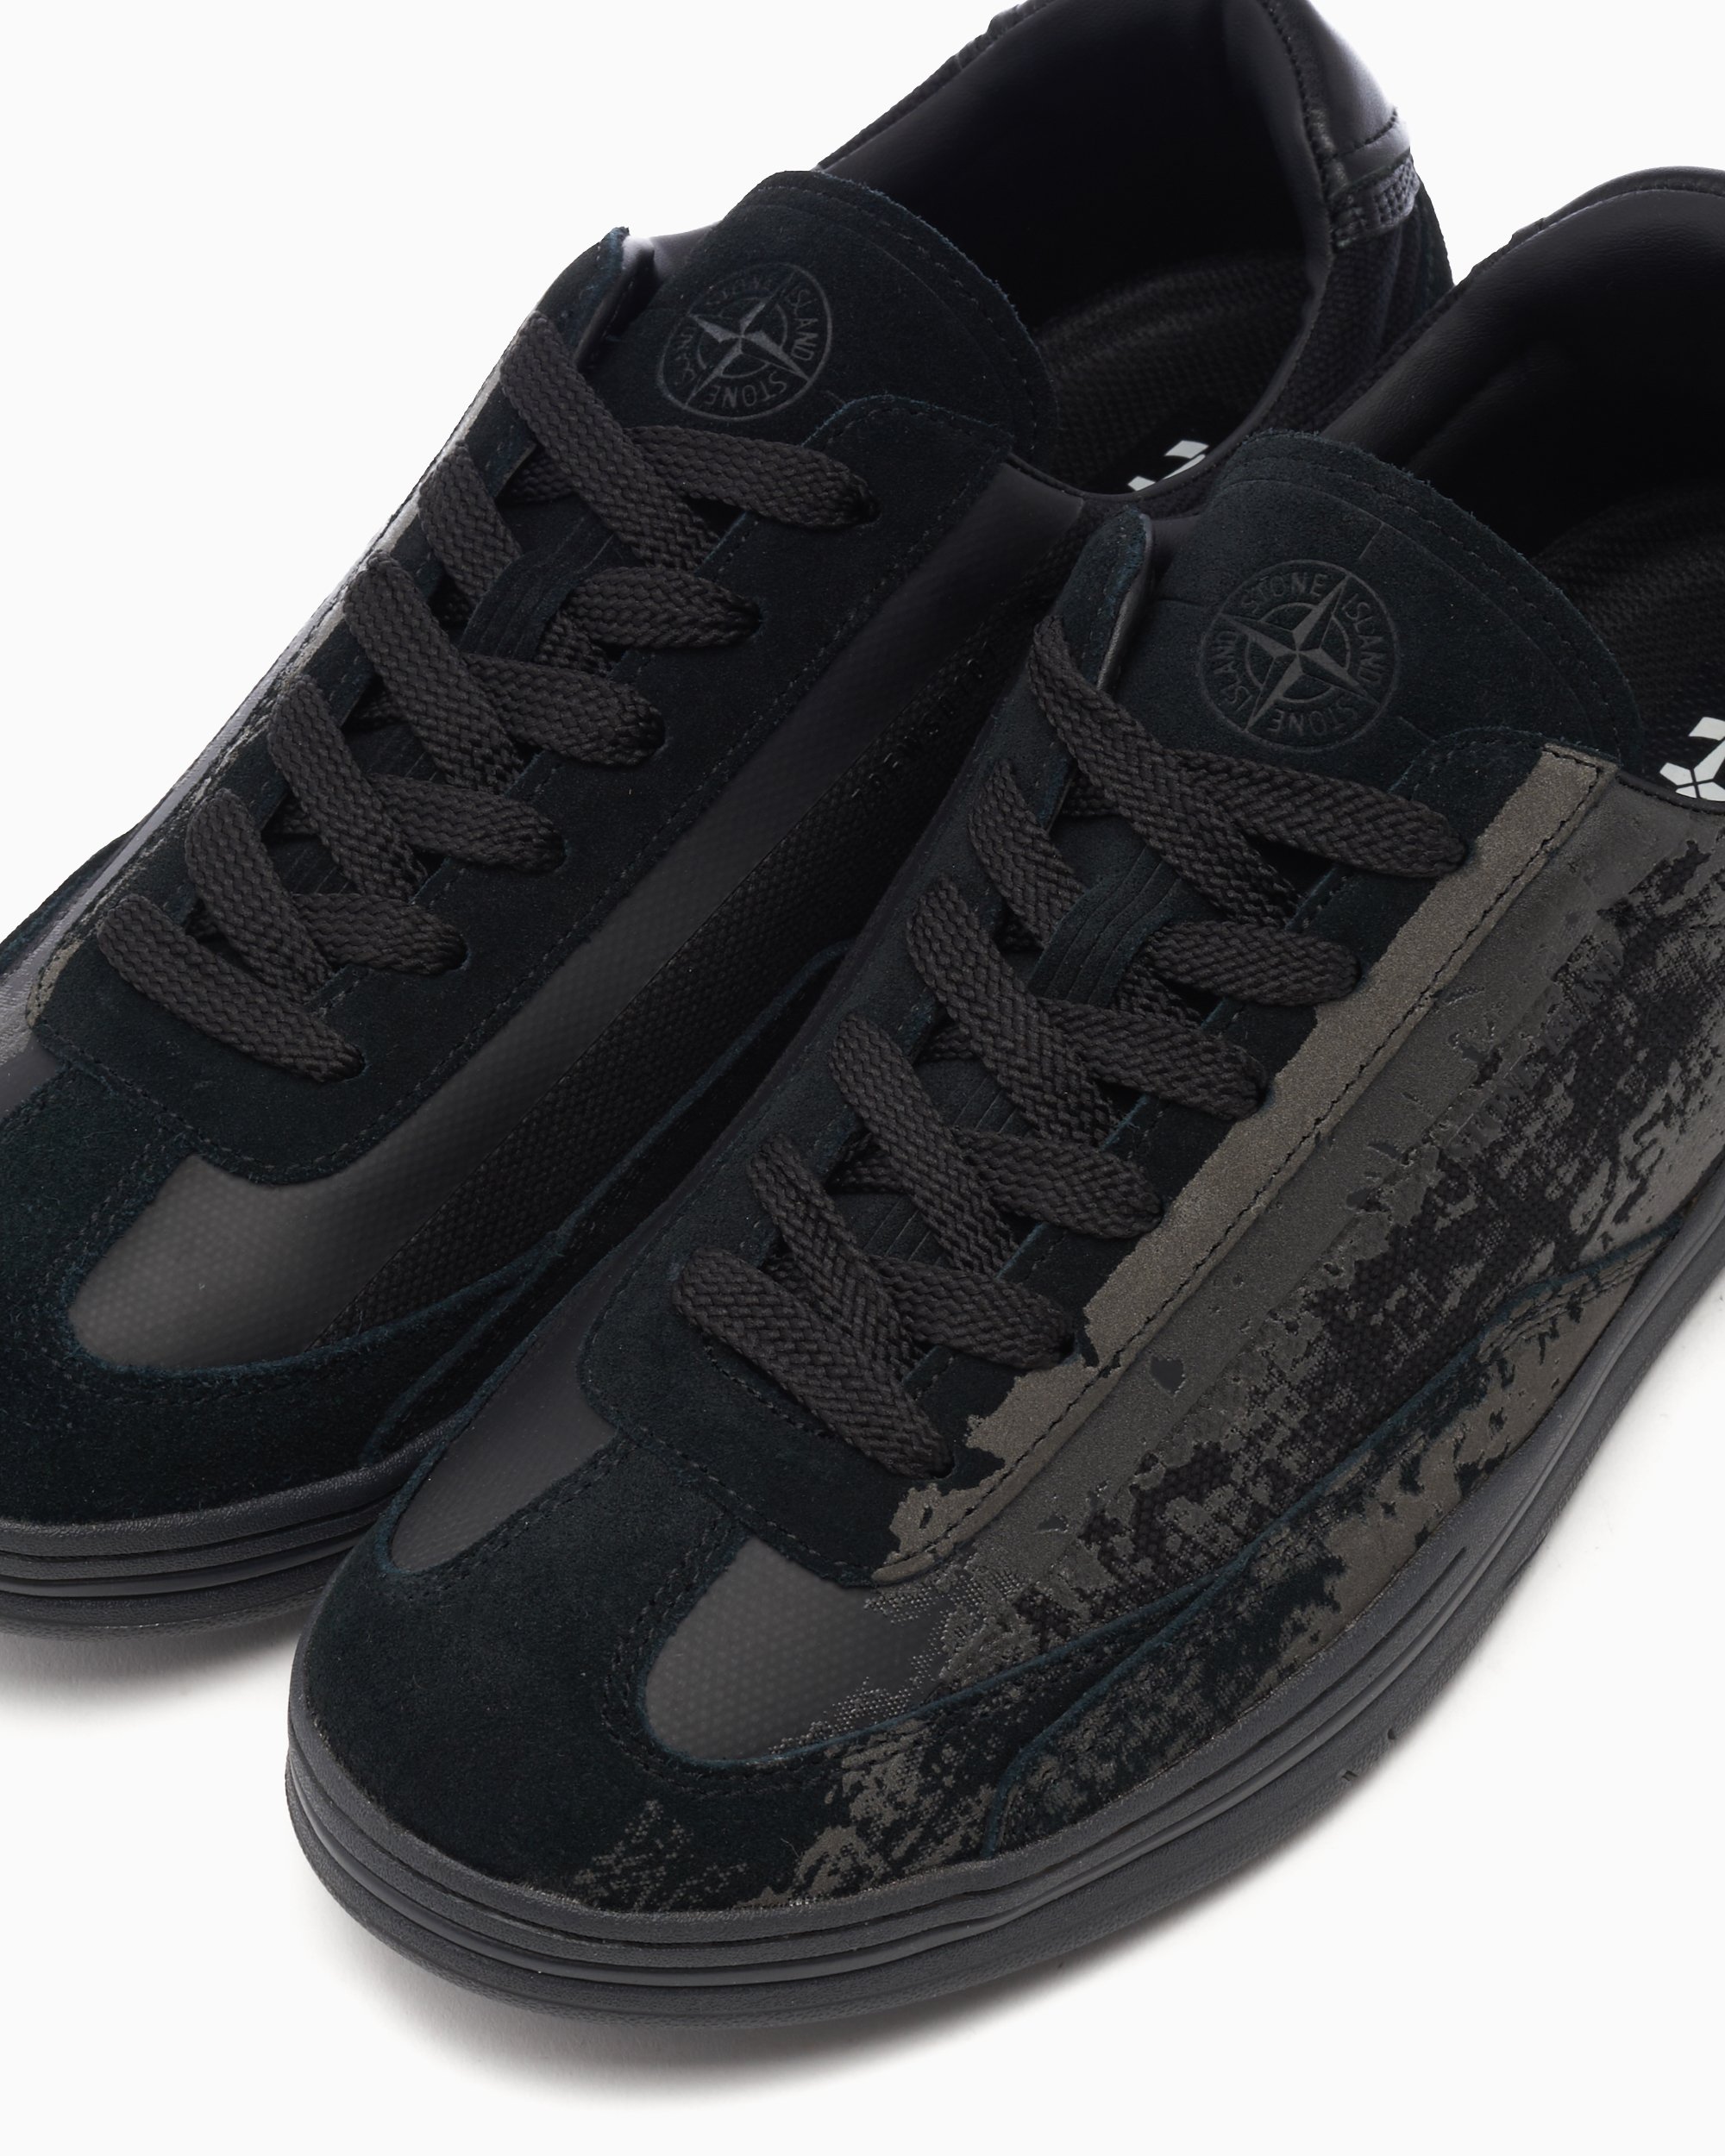 Stone Island Sneakers Black 79FWS0101-V0029| FOOTDISTRICT